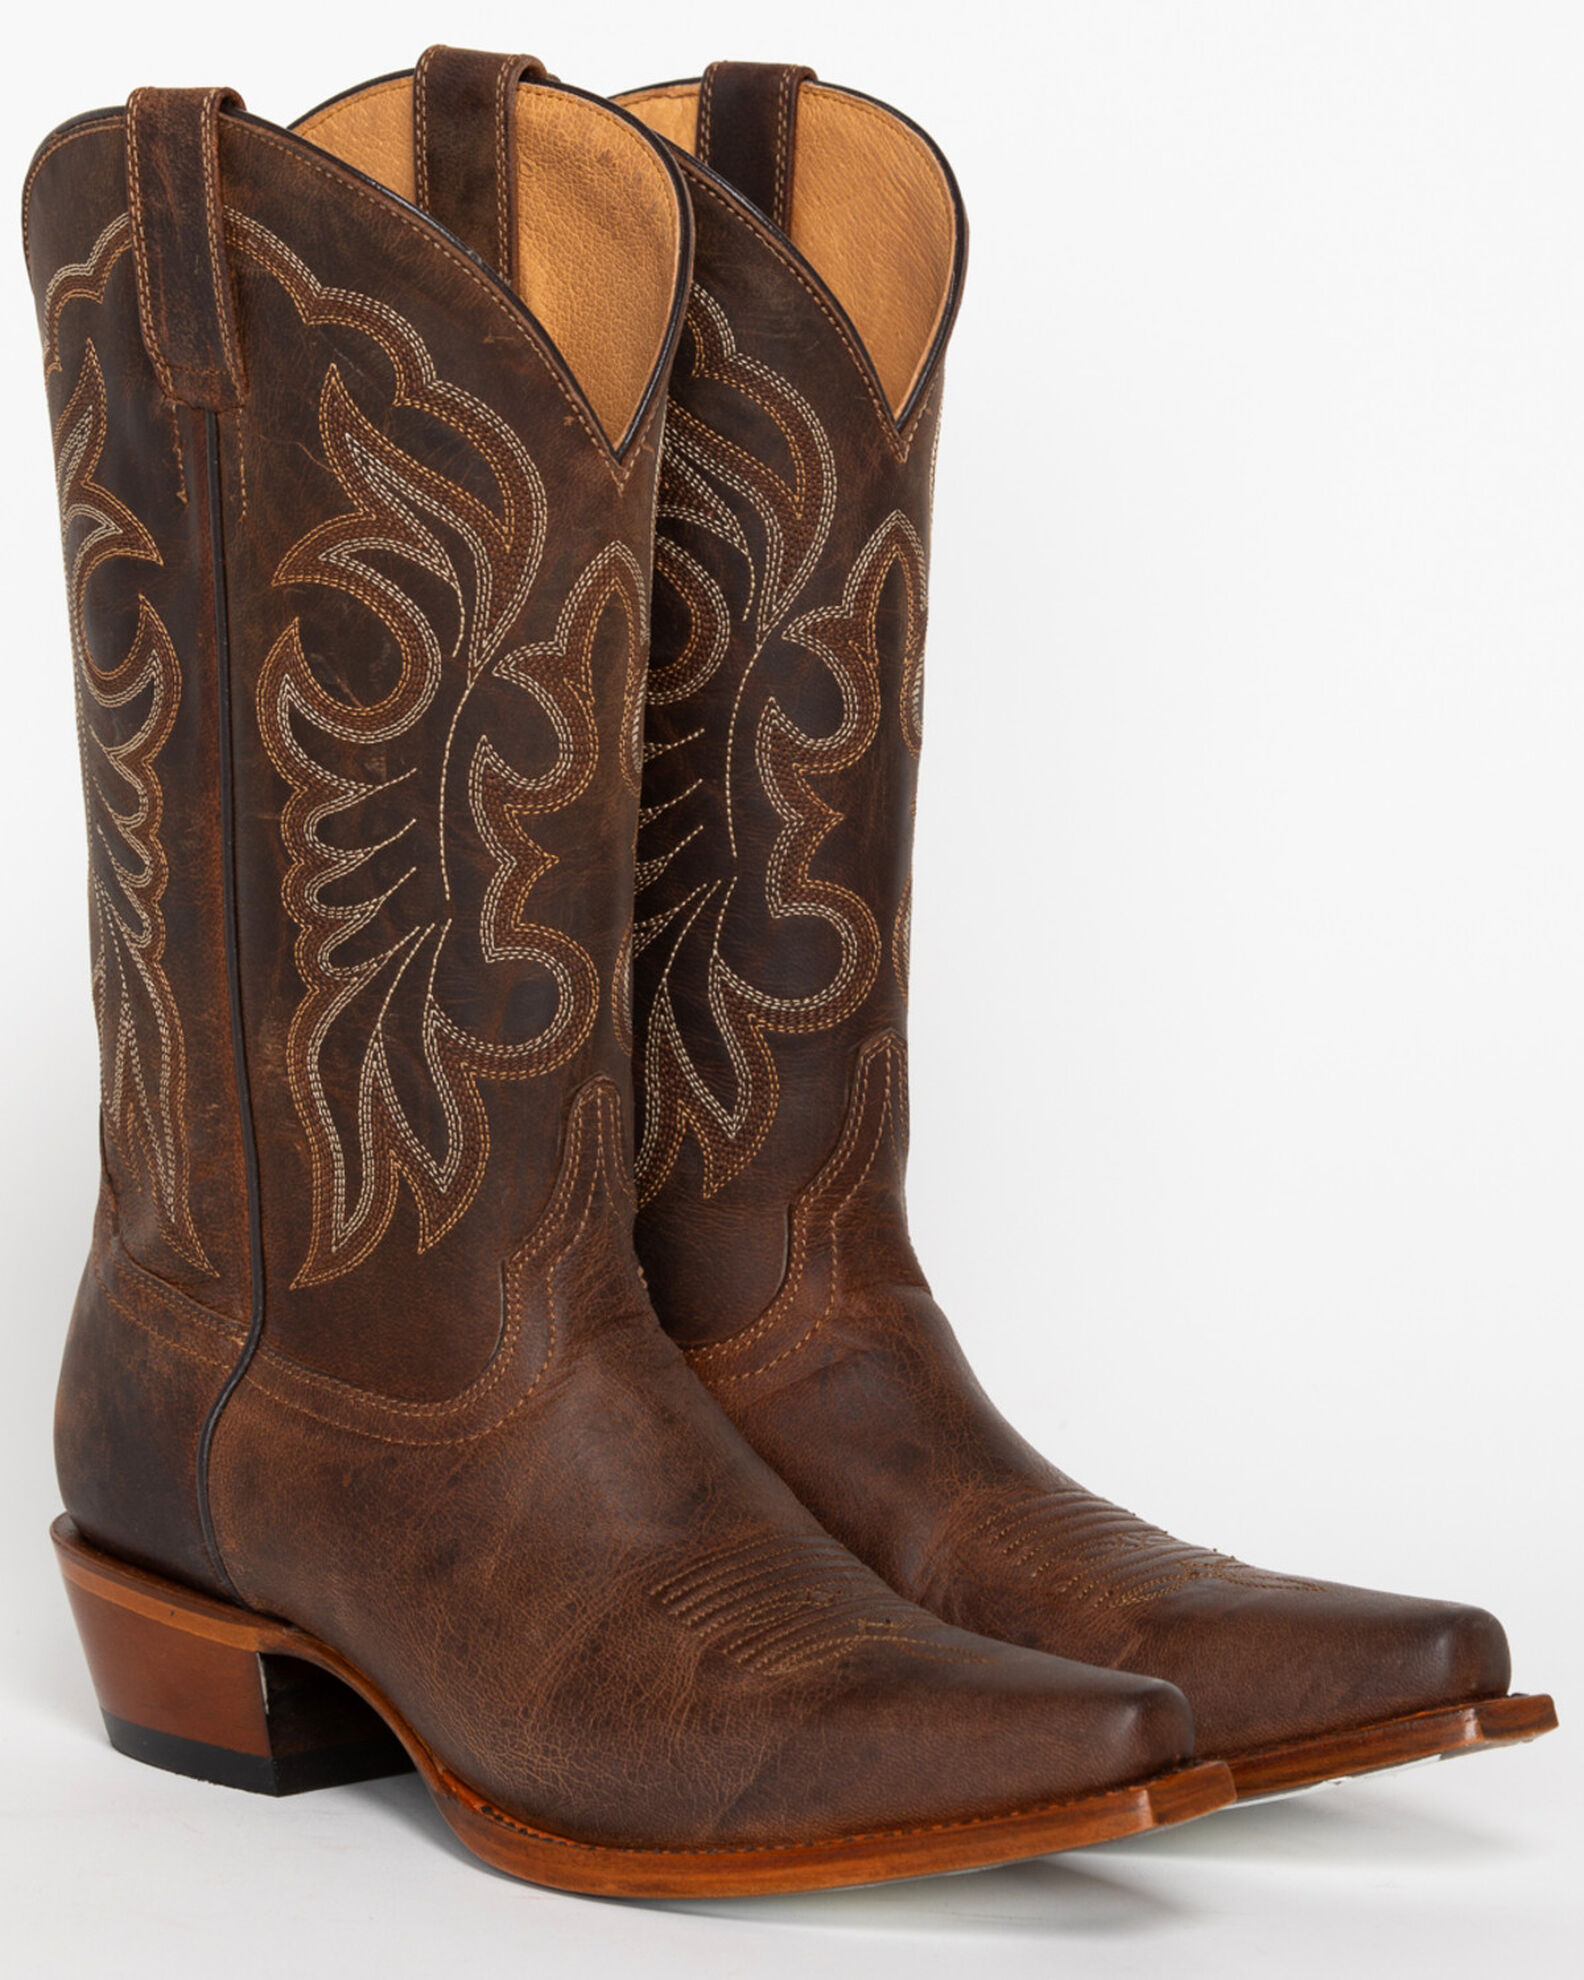 Product Name: Shyanne Women's Loretta Western Boots - Snip Toe